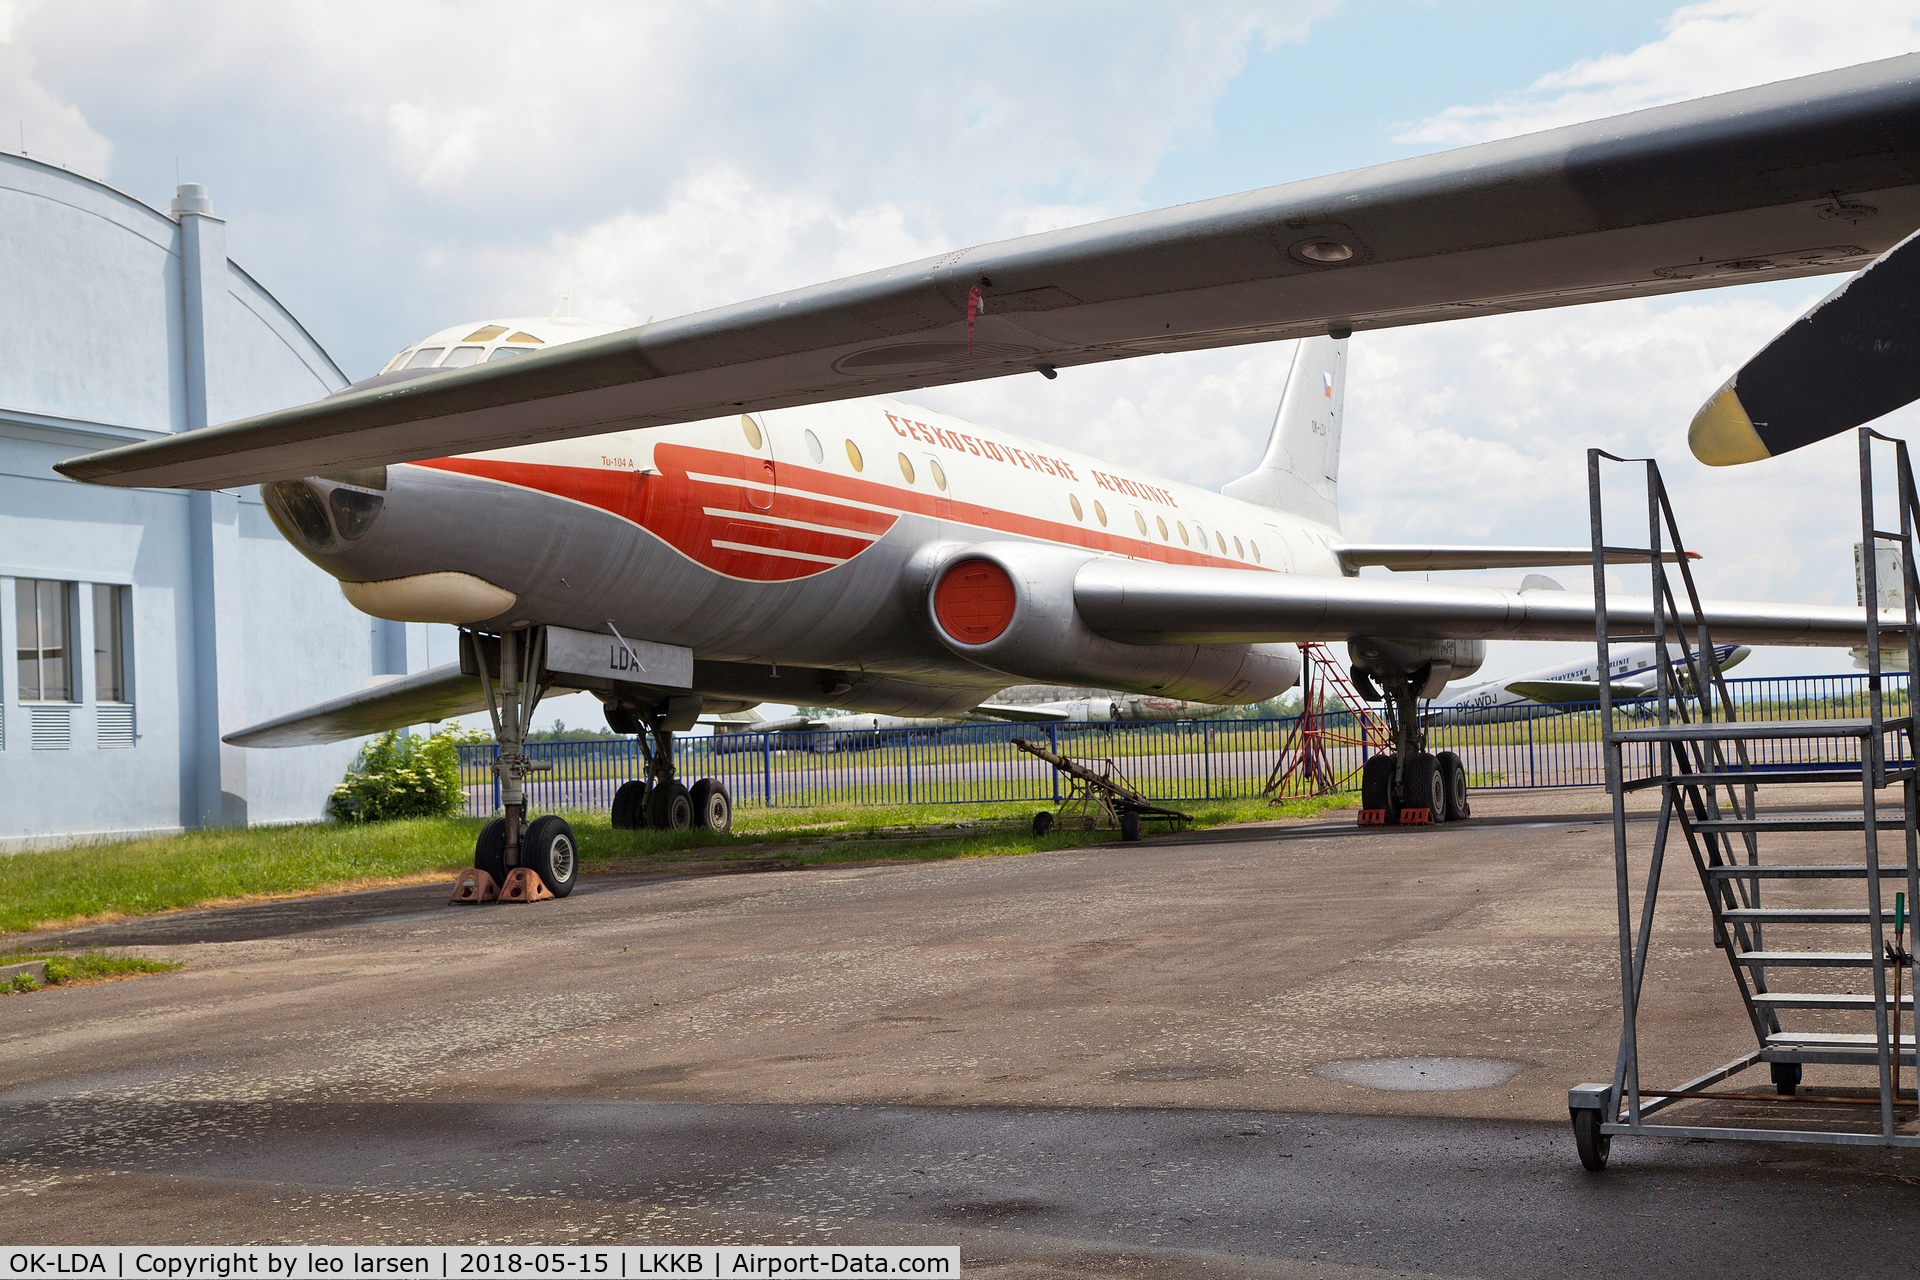 OK-LDA, 1957 Tupolev Tu-104A C/N 76600503, Kebly Air Museum 15.5.2018